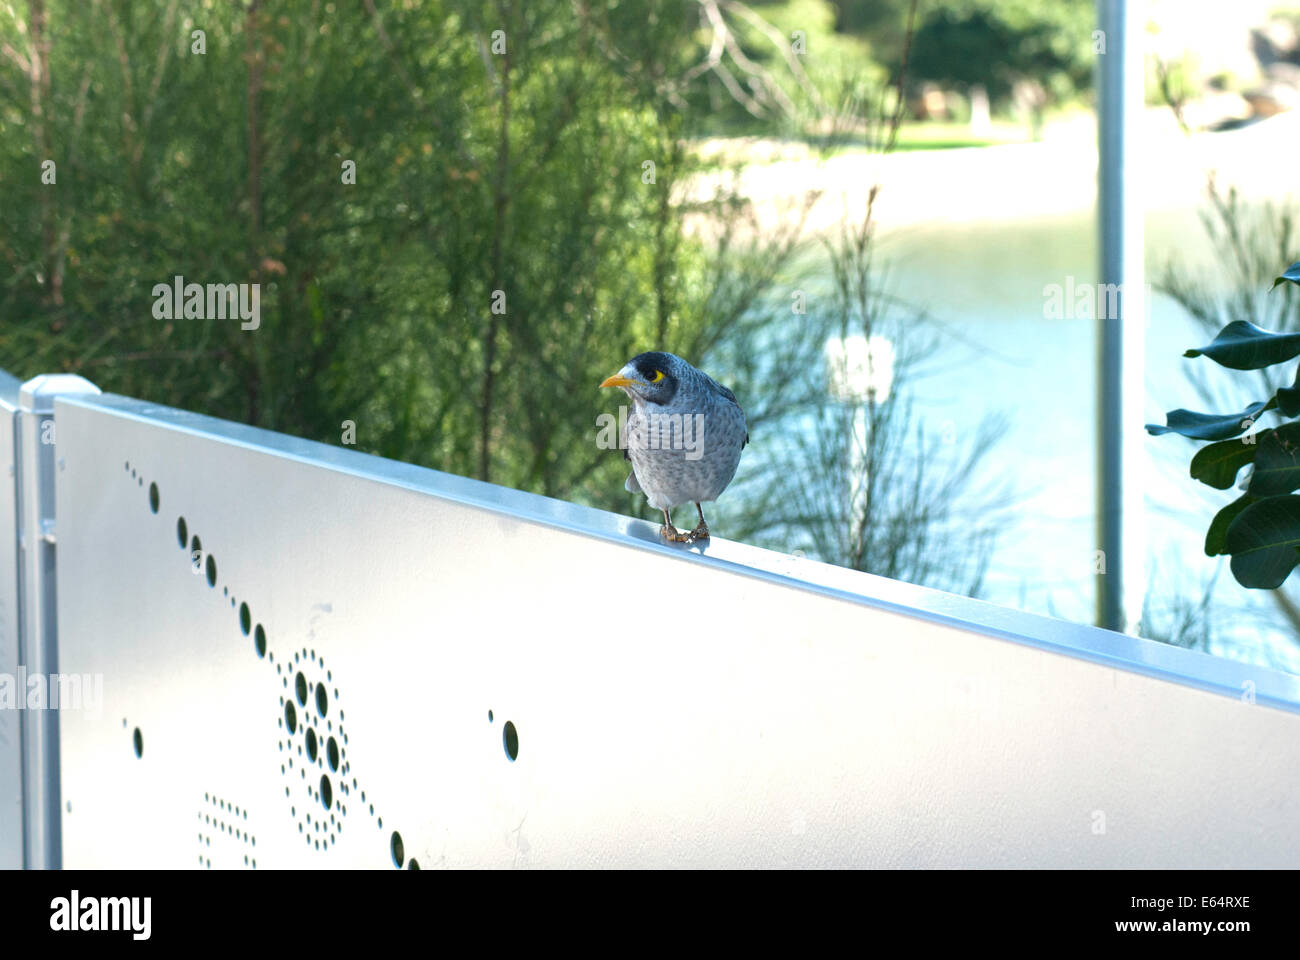 A noisy miner bird sitting on a fence at King George Park, Rozelle, Australia Stock Photo